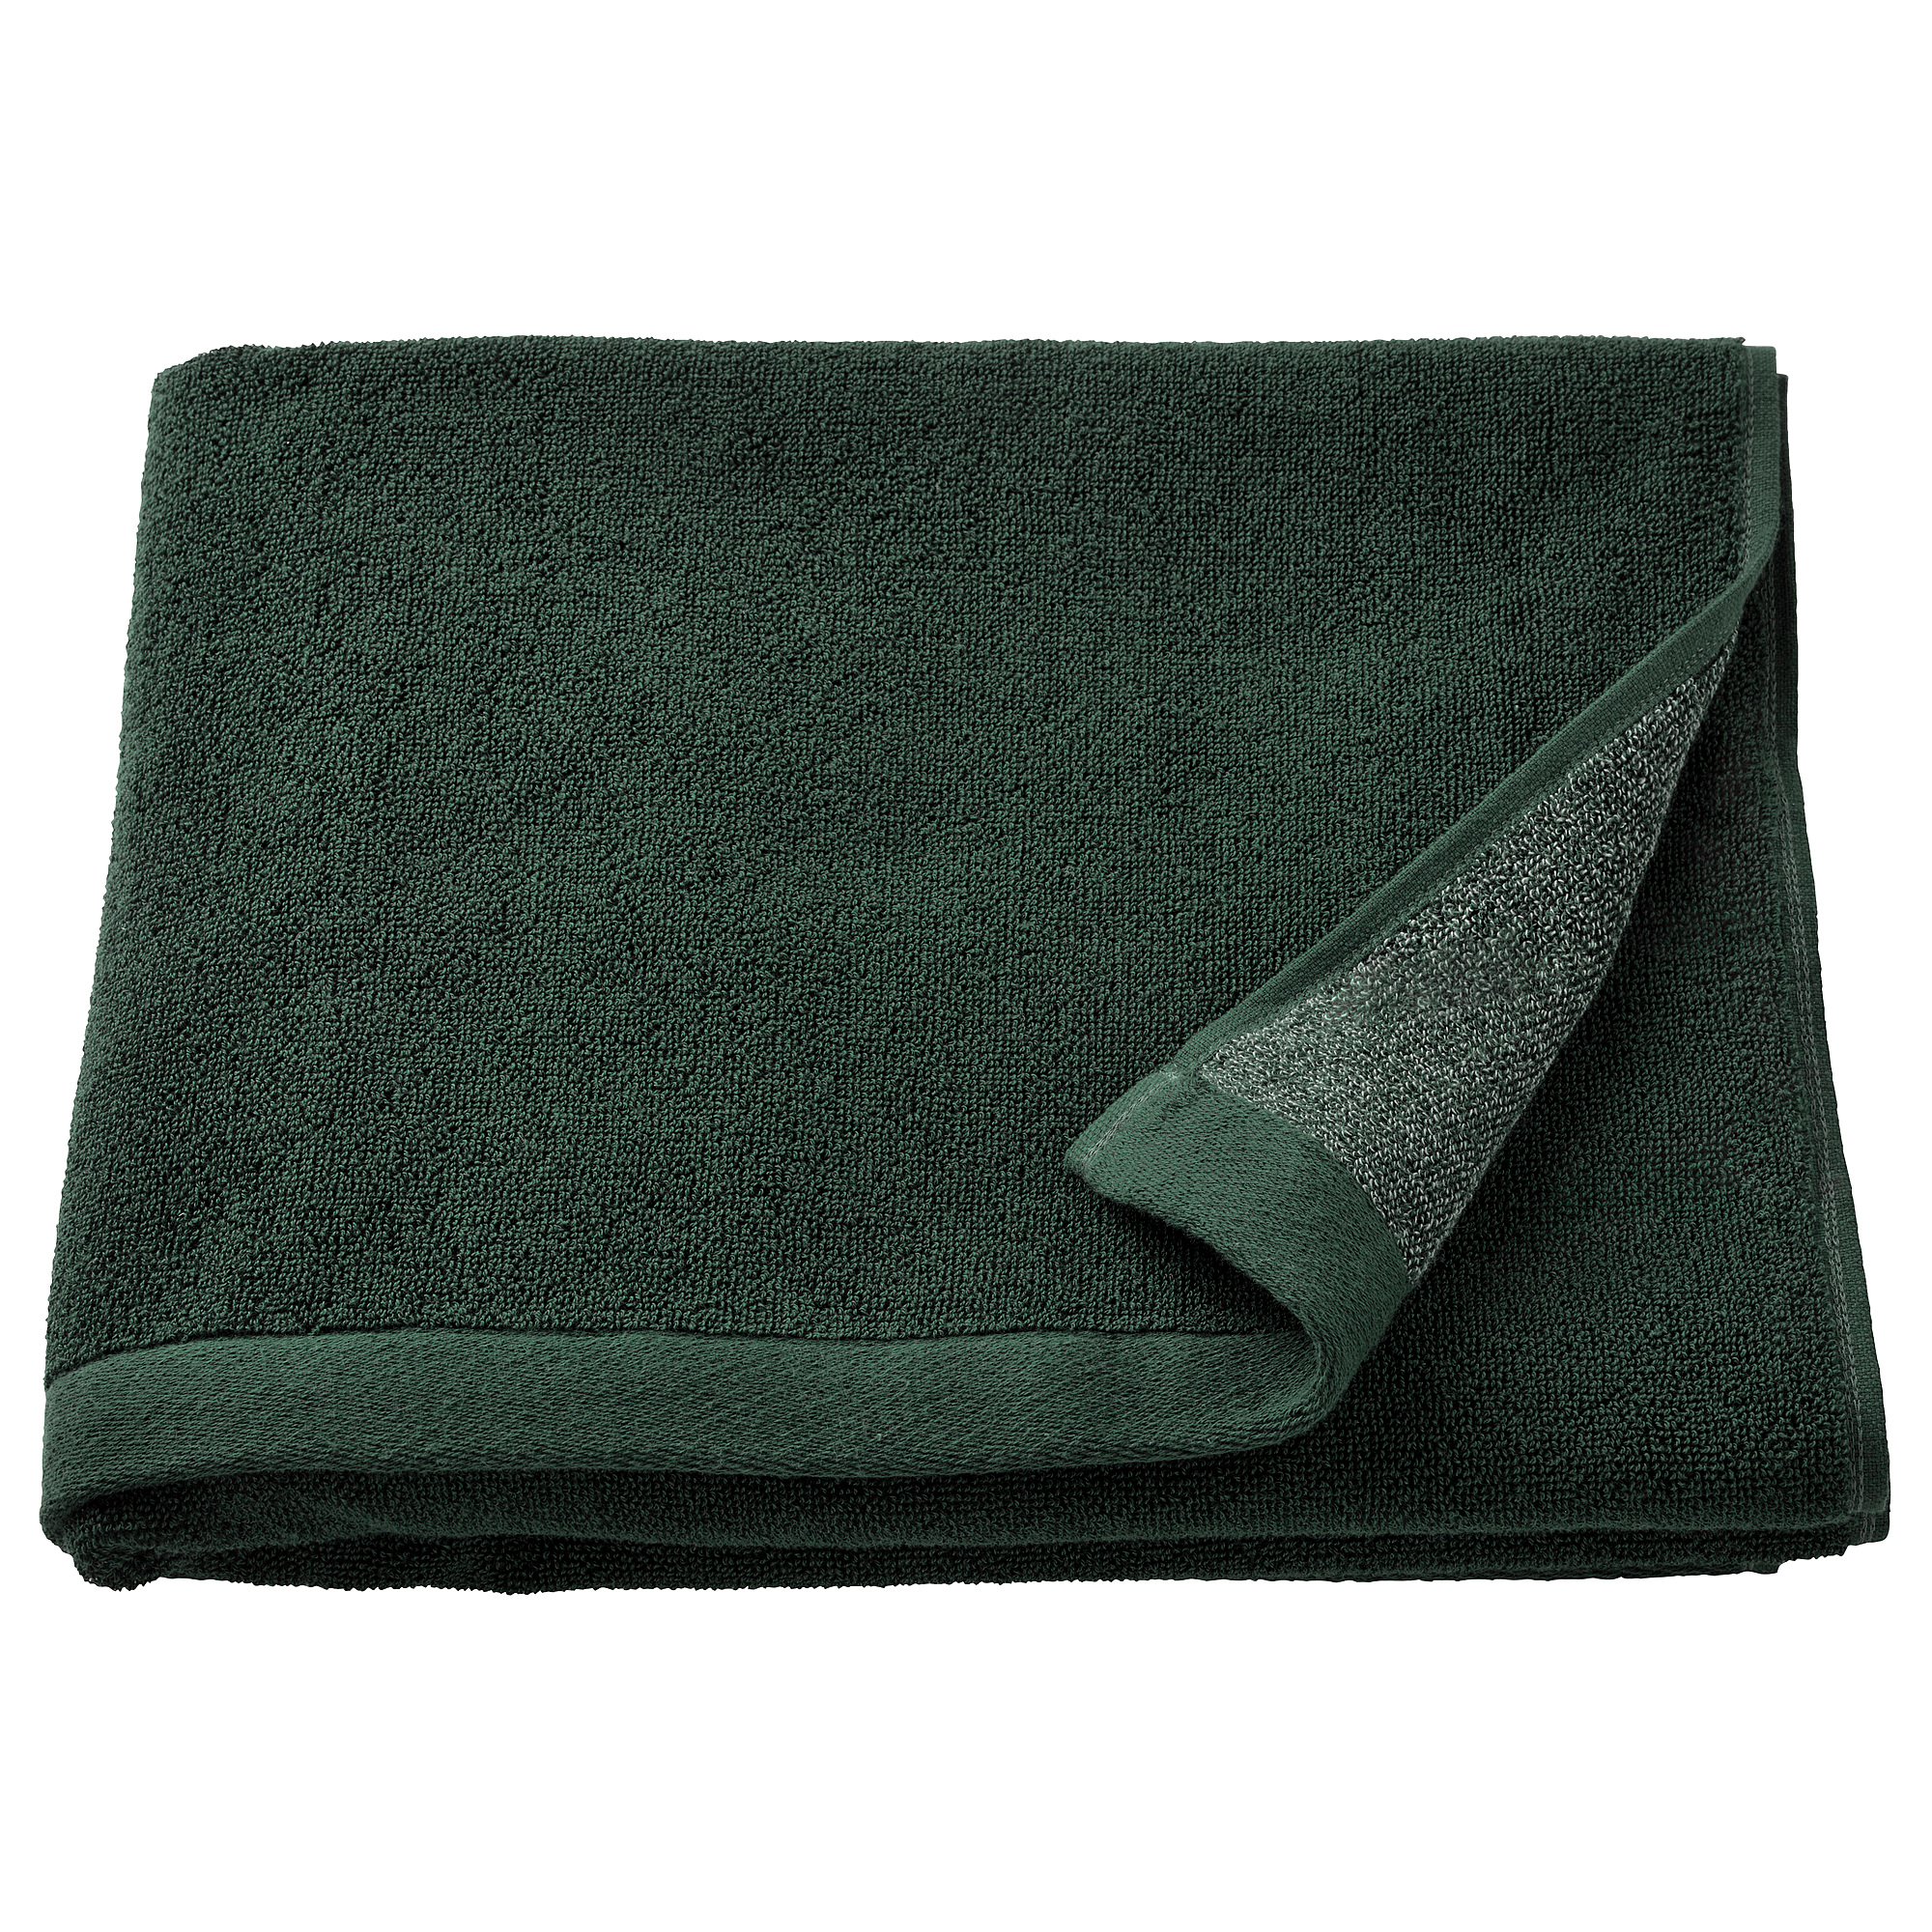 HIMLEÅN bath towel